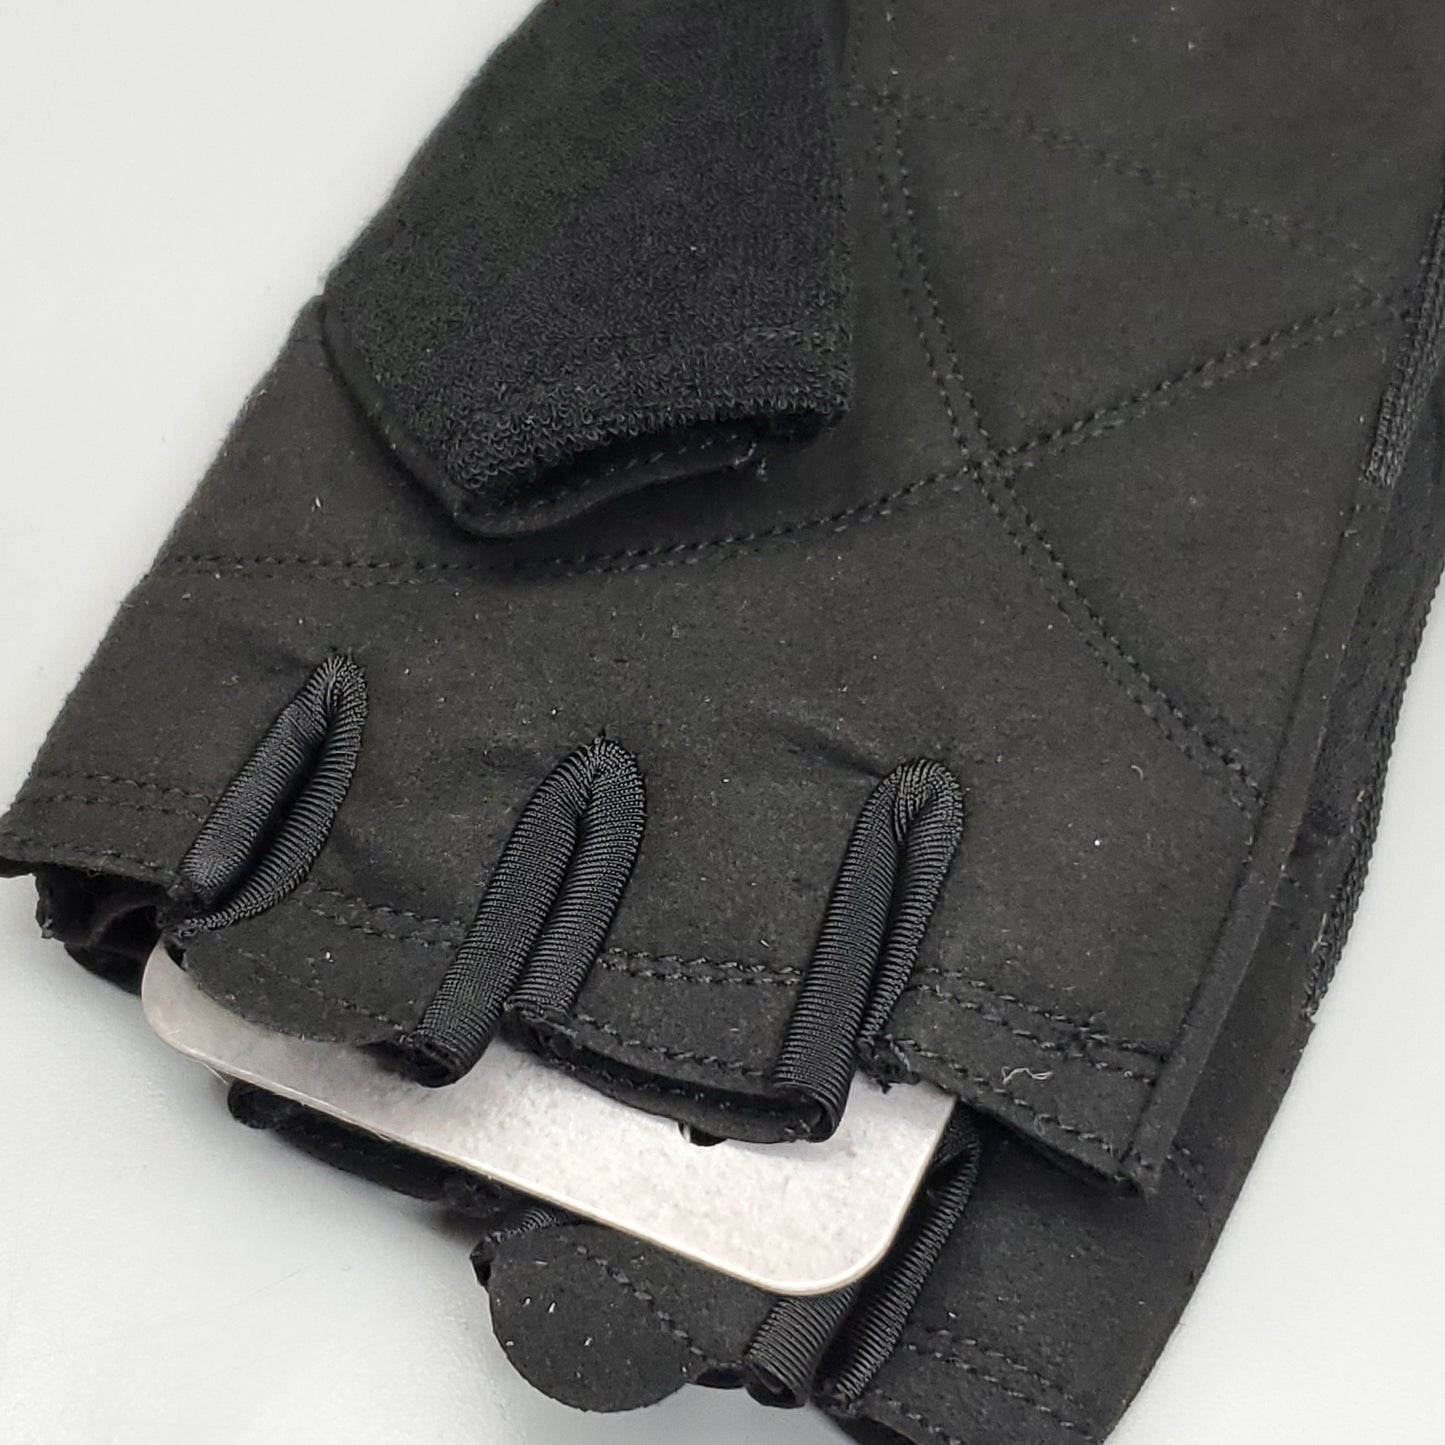 CAP Pair of Classic Training Gloves SZ L / XL Hook & Loop W/ Finger Pull Tab Black HHWG-1BKL (New)